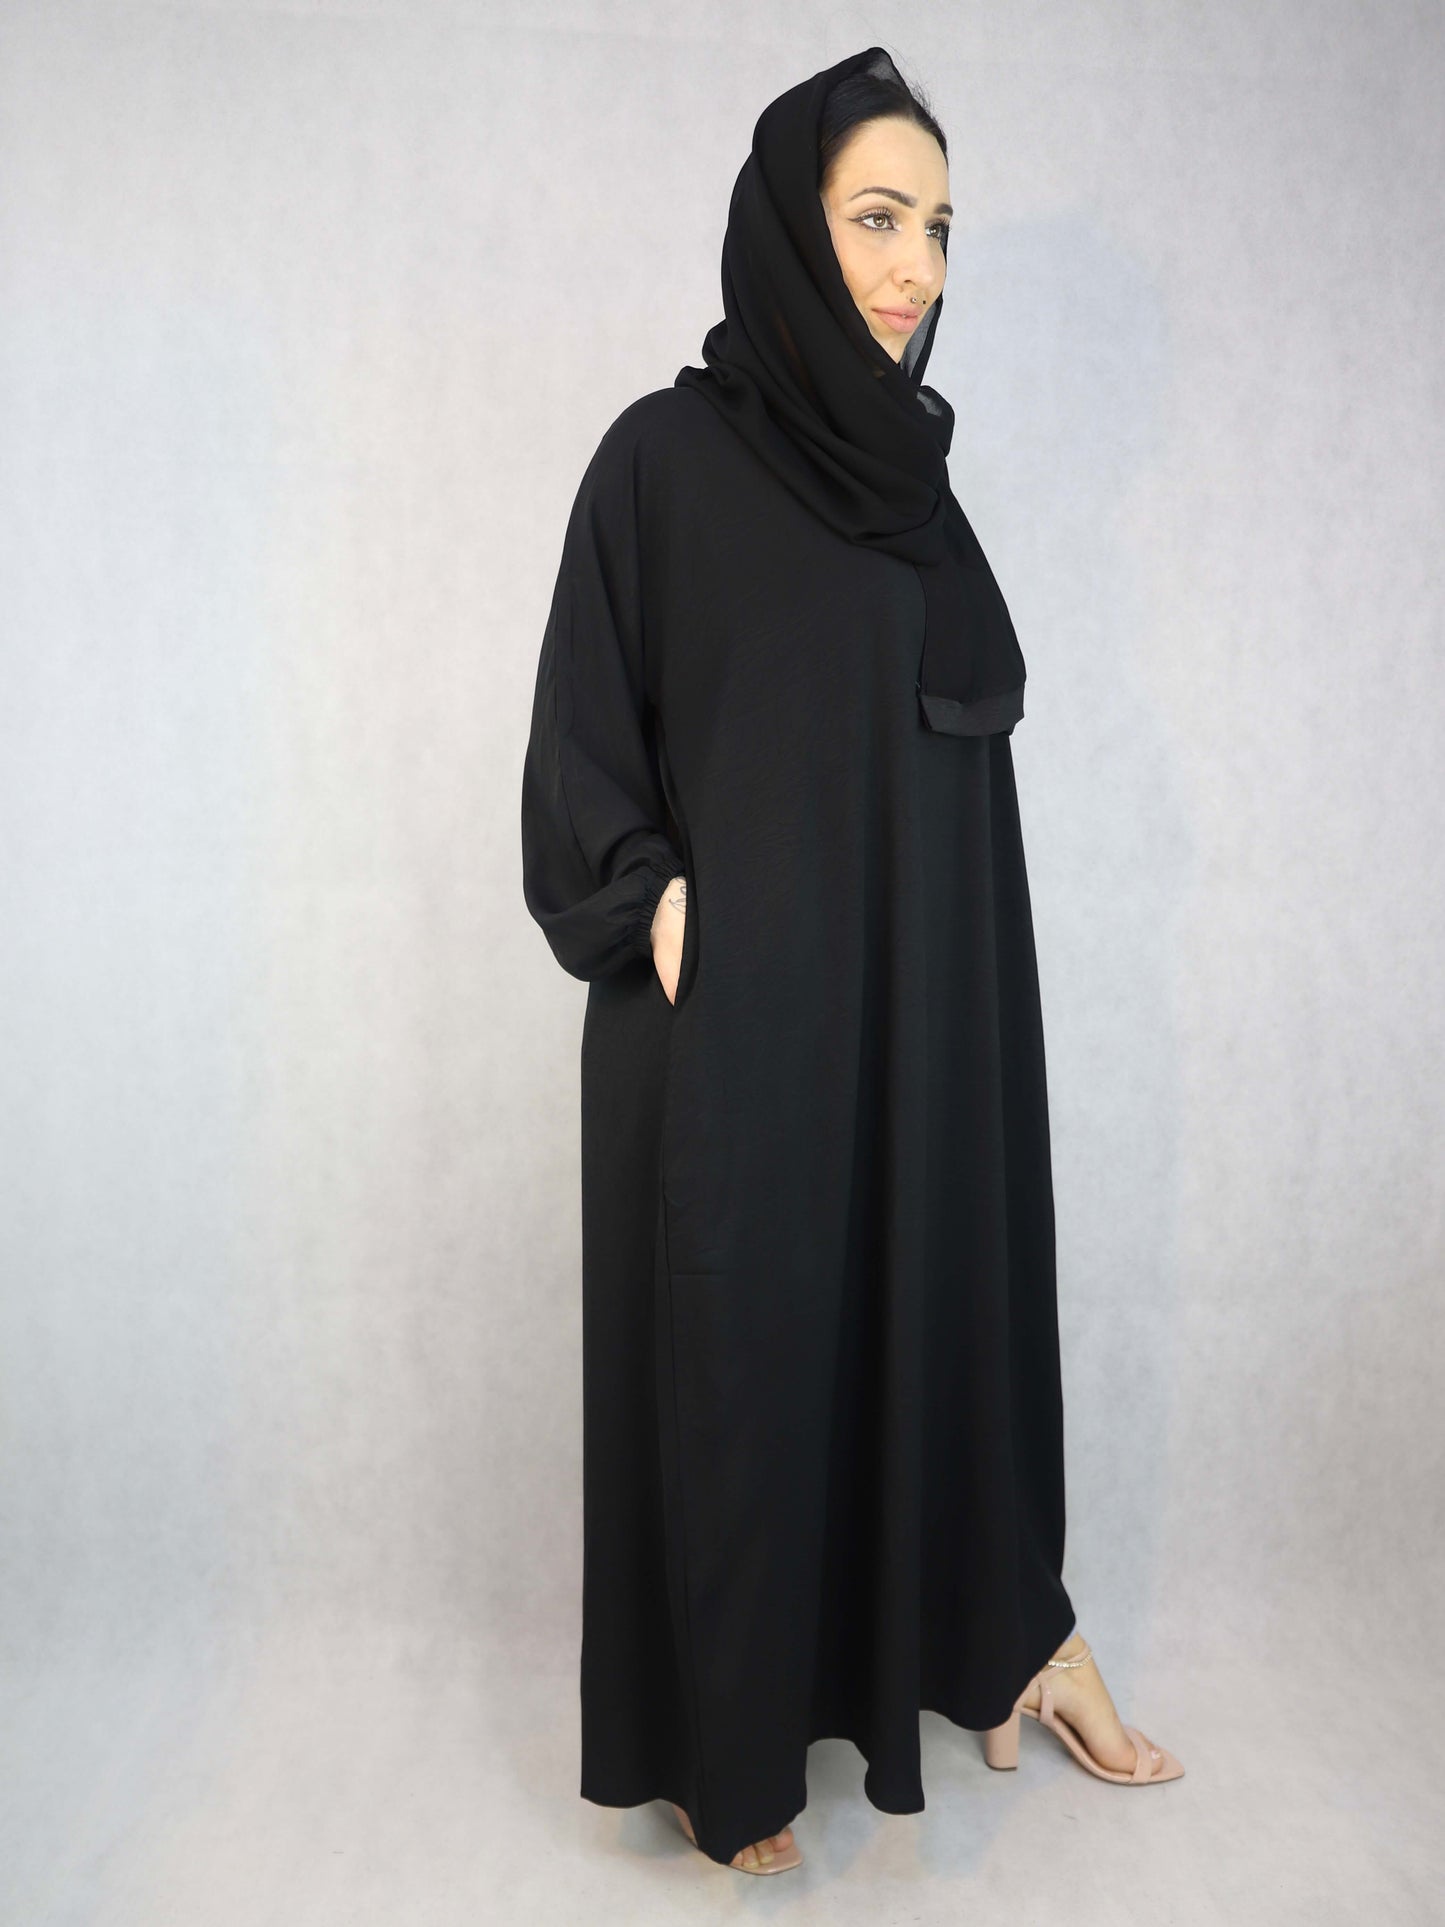 Marble Effect Black Colour Abaya Modest Dress.